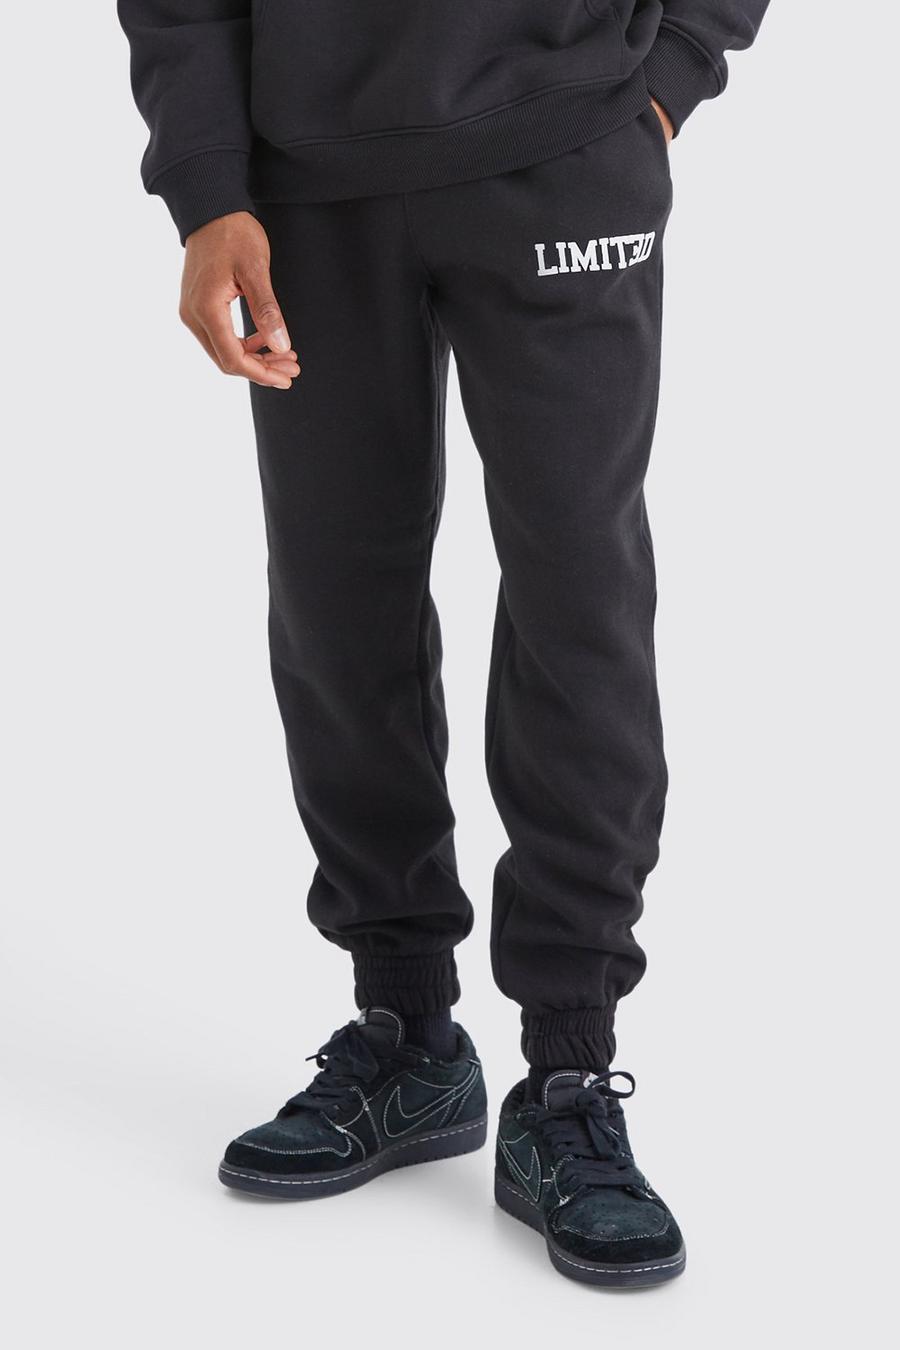 Pantaloni tuta Regular Fit Limited, Black